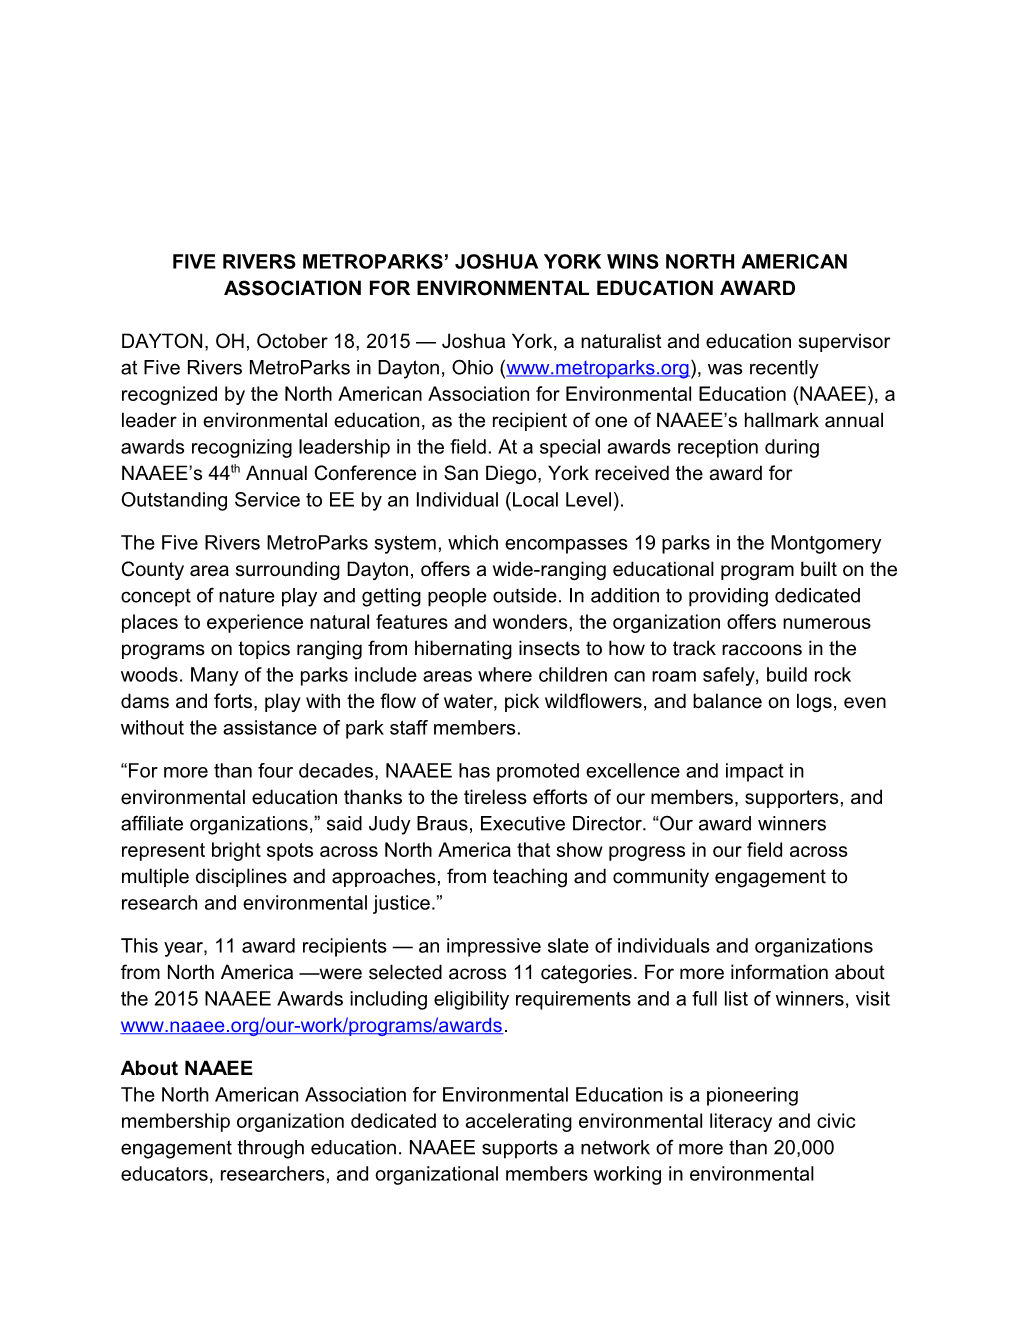 Five Rivers Metroparks Joshua York Wins North American Association for Environmental Education